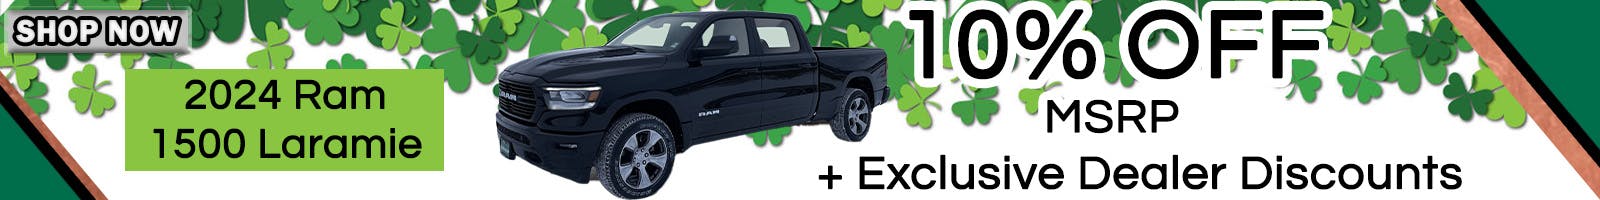 Dodge Incentive/Ram 1500 Laramie 3.2024 | Butte Auto Group